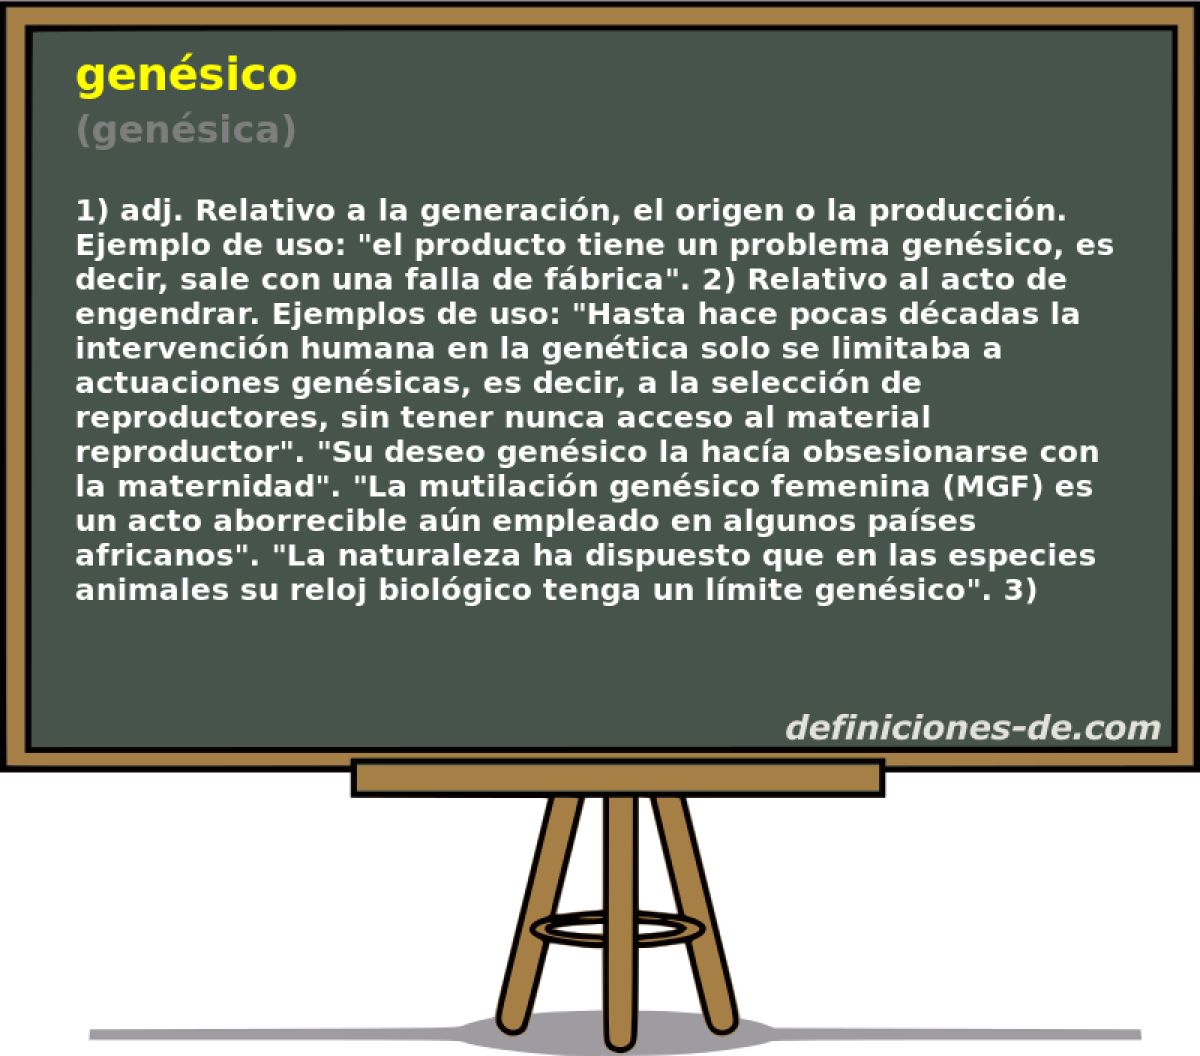 gensico (gensica)